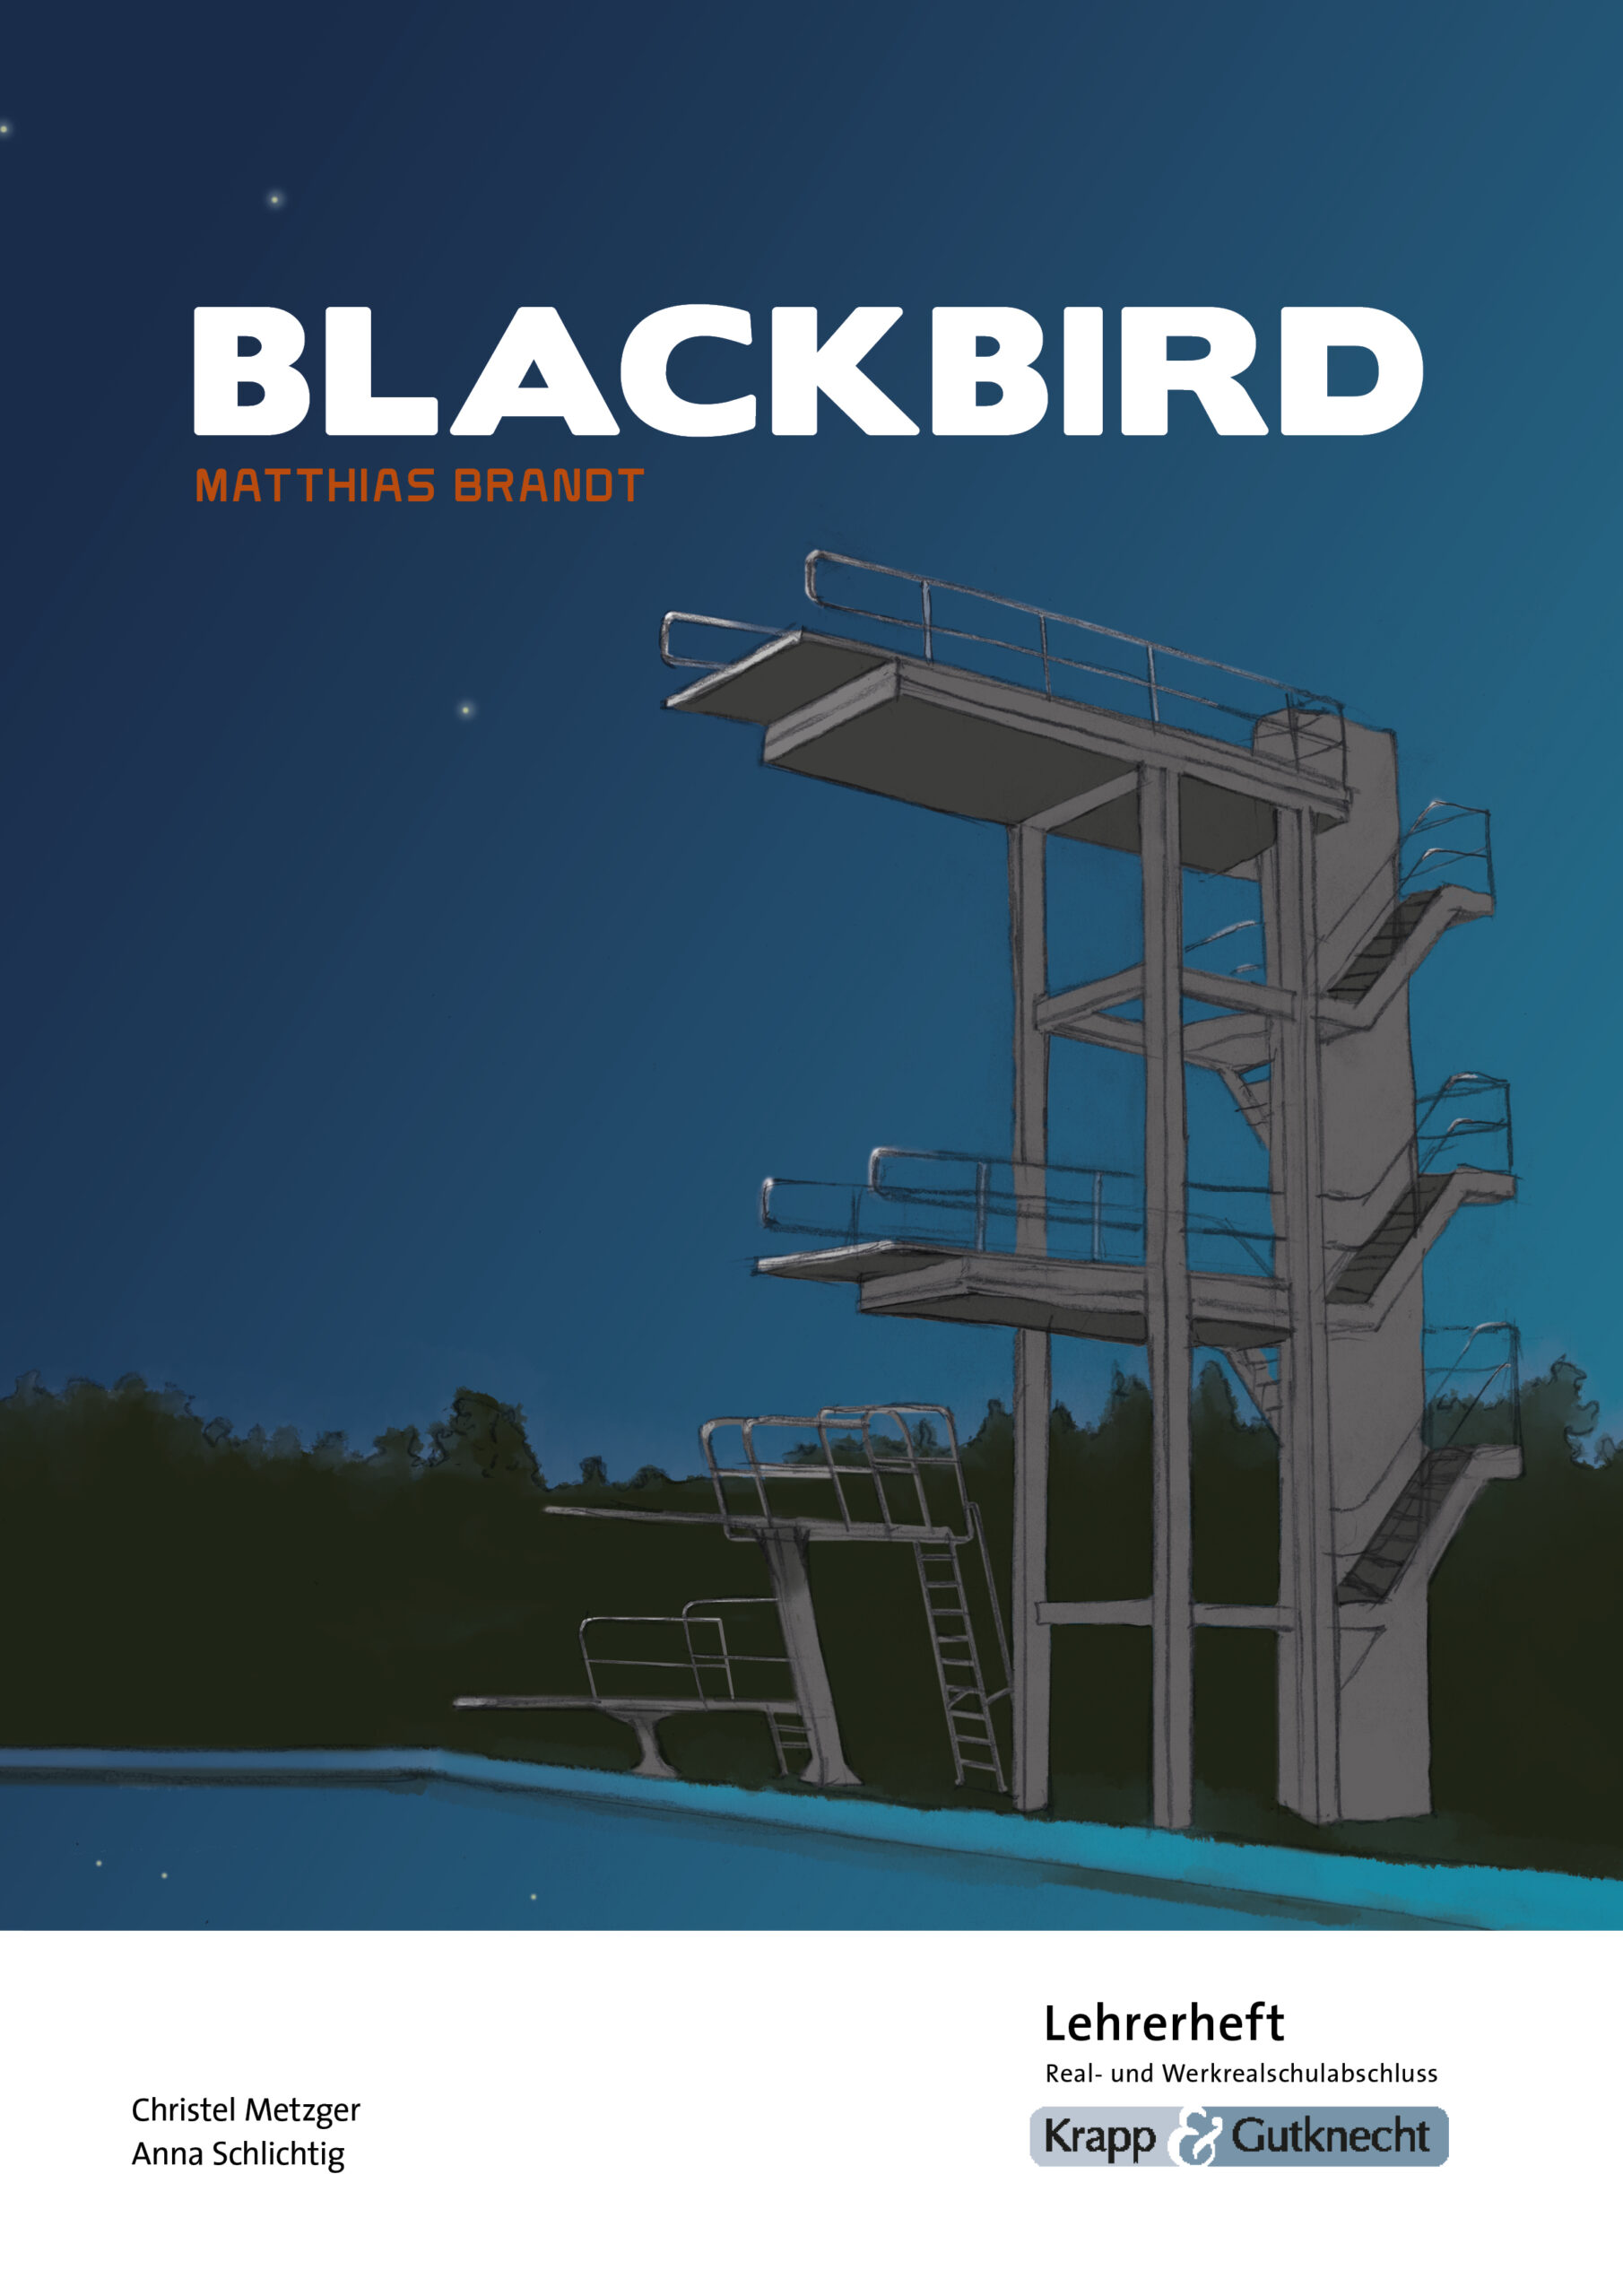 LH Titel Blackbird M Niveau 20220607 scaled